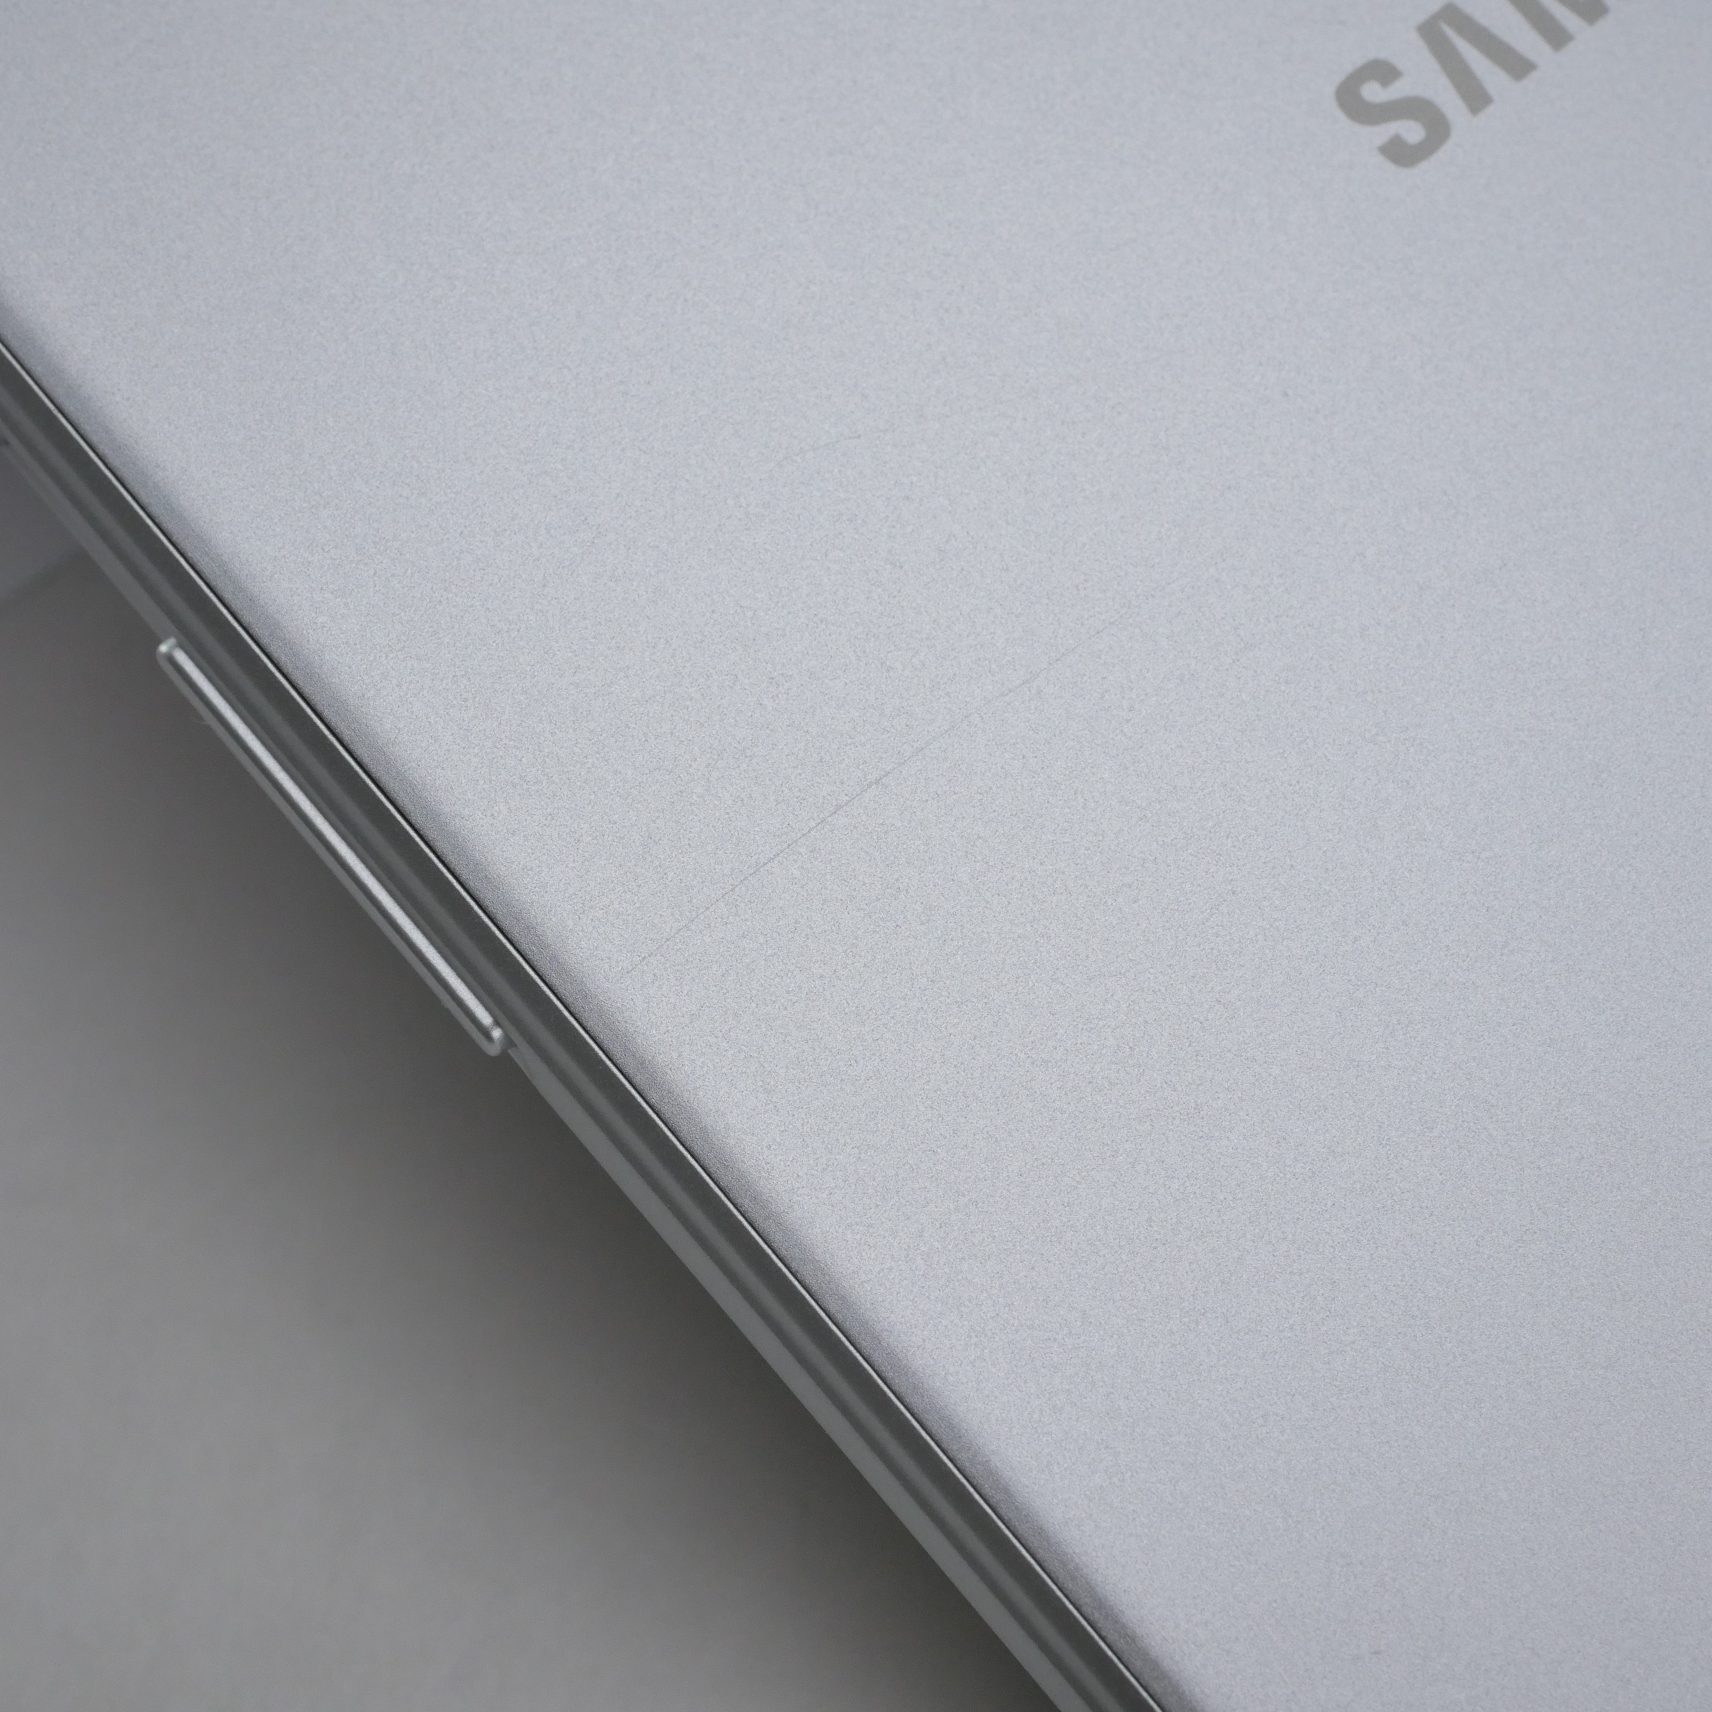 Samsung Galaxy Tab A (2019) SM-T290 32GB, Wi-Fi, 8 in - Silver - SM-T290NZSAXAR - Click Image to Close